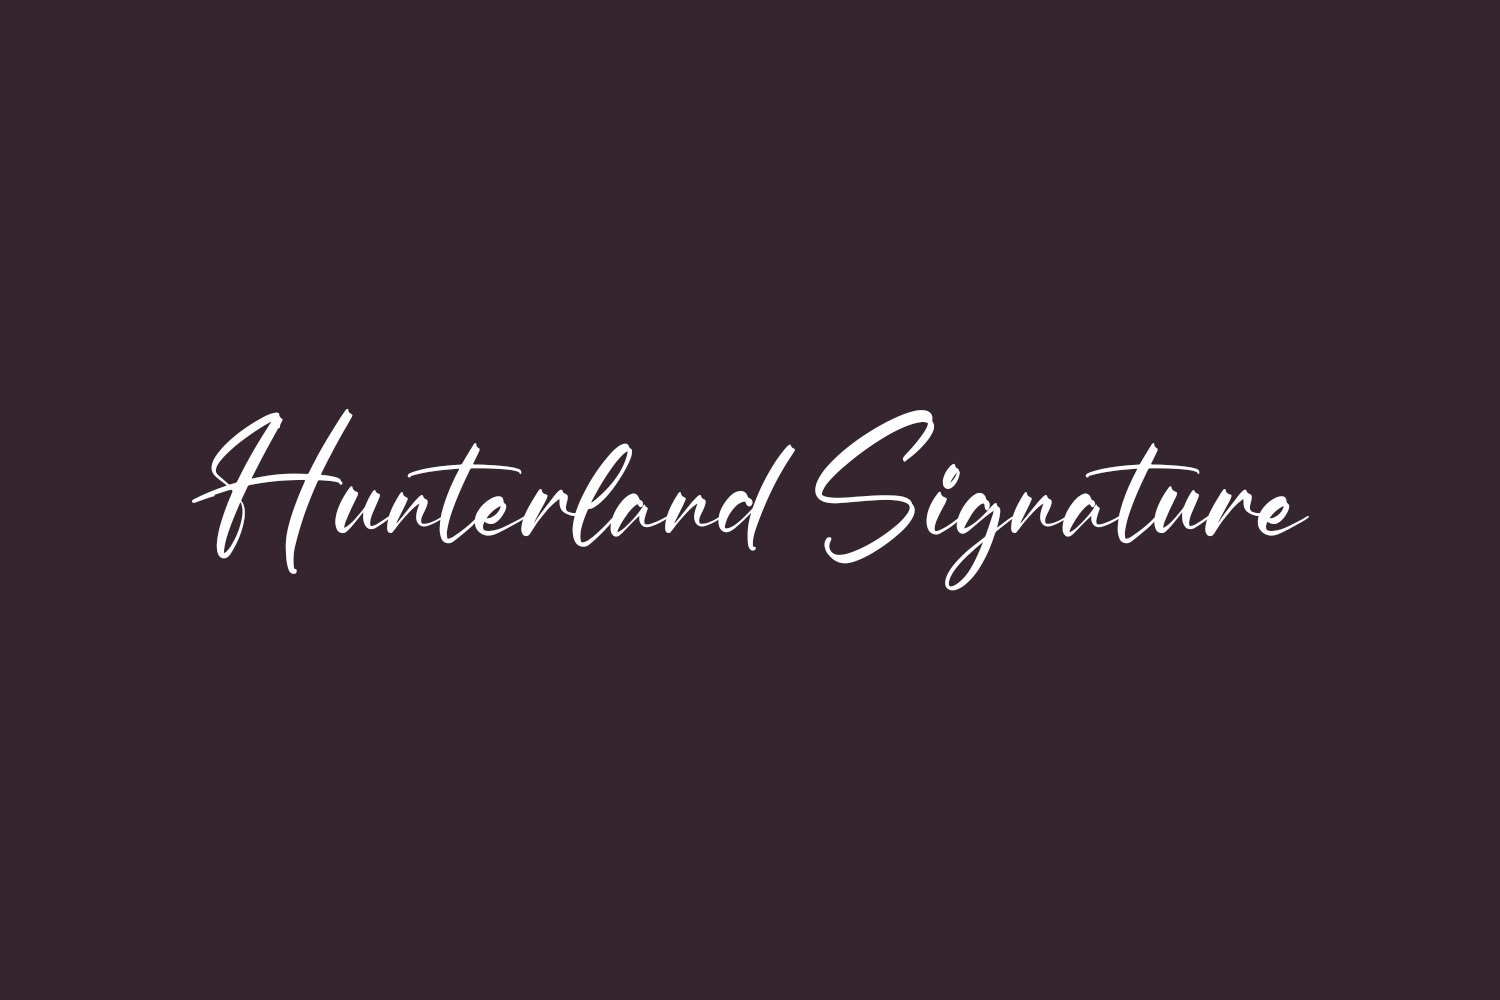 Hunterland Signature Free Font